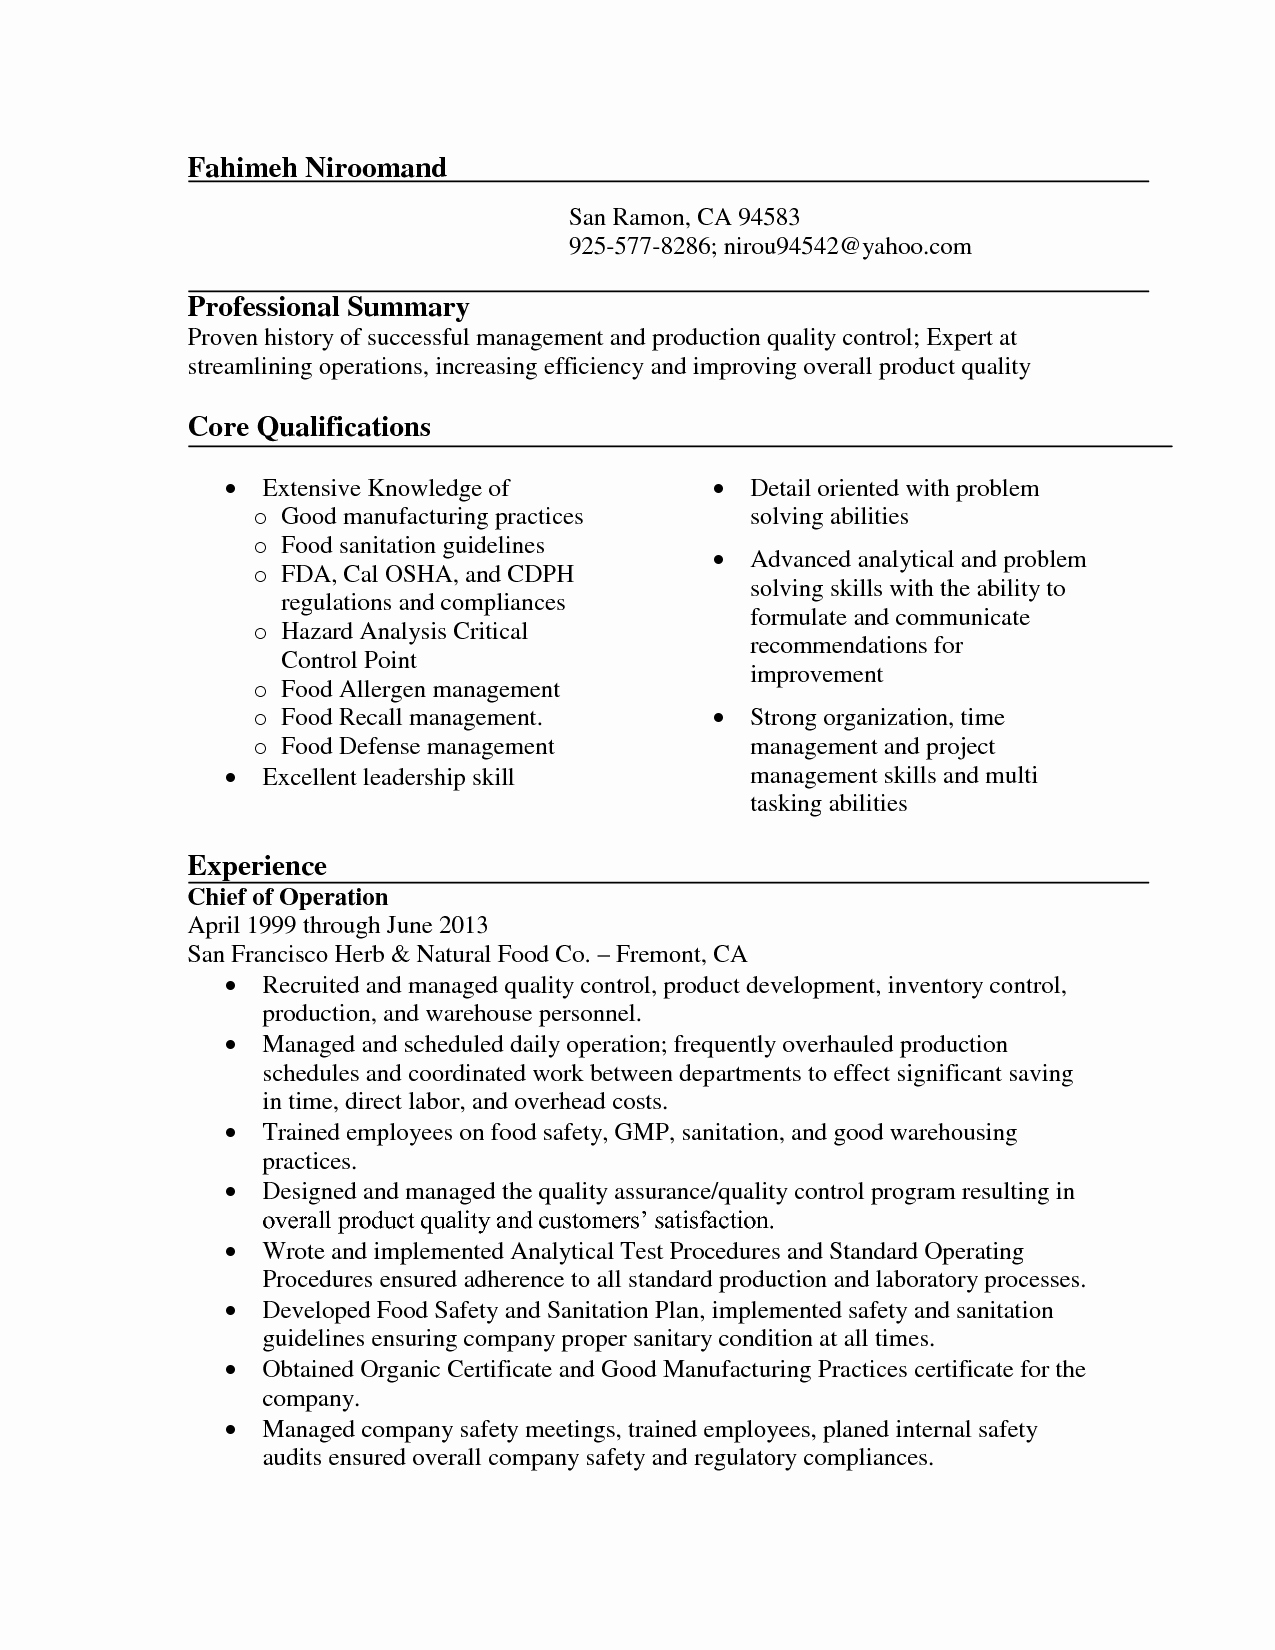 Resume Format Quality Assurance Pharma  